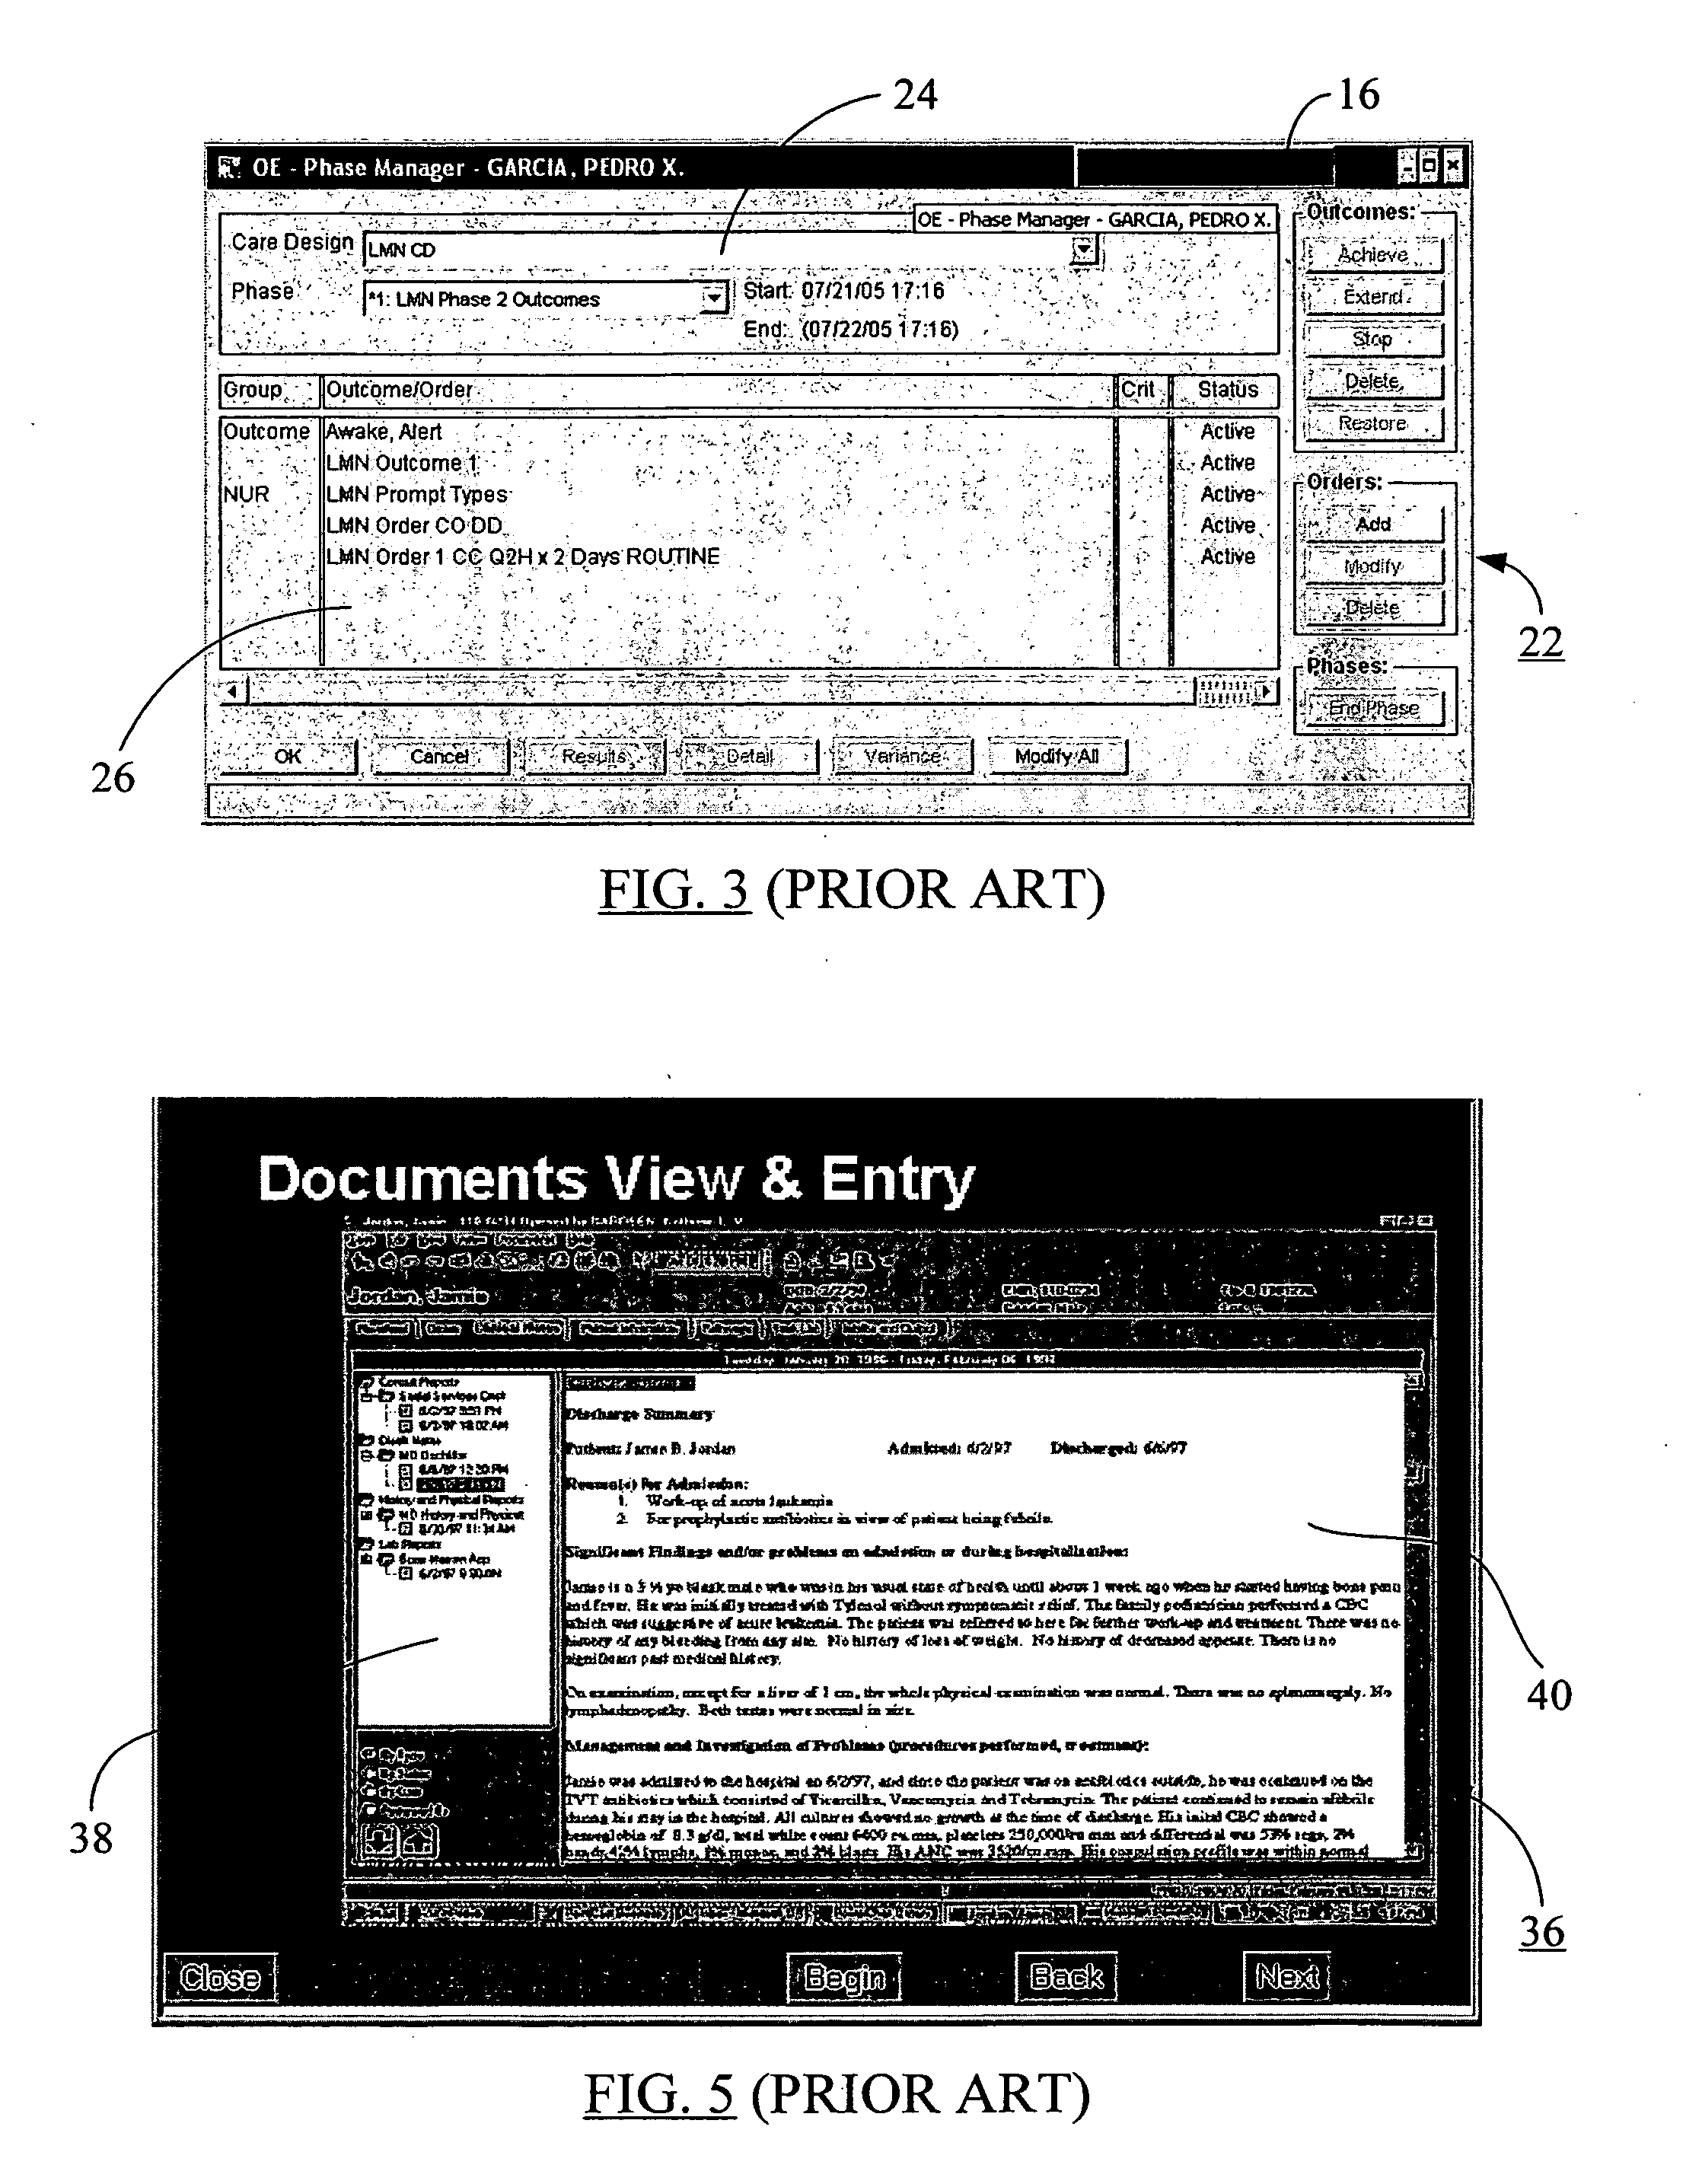 Visual document navigation scheme